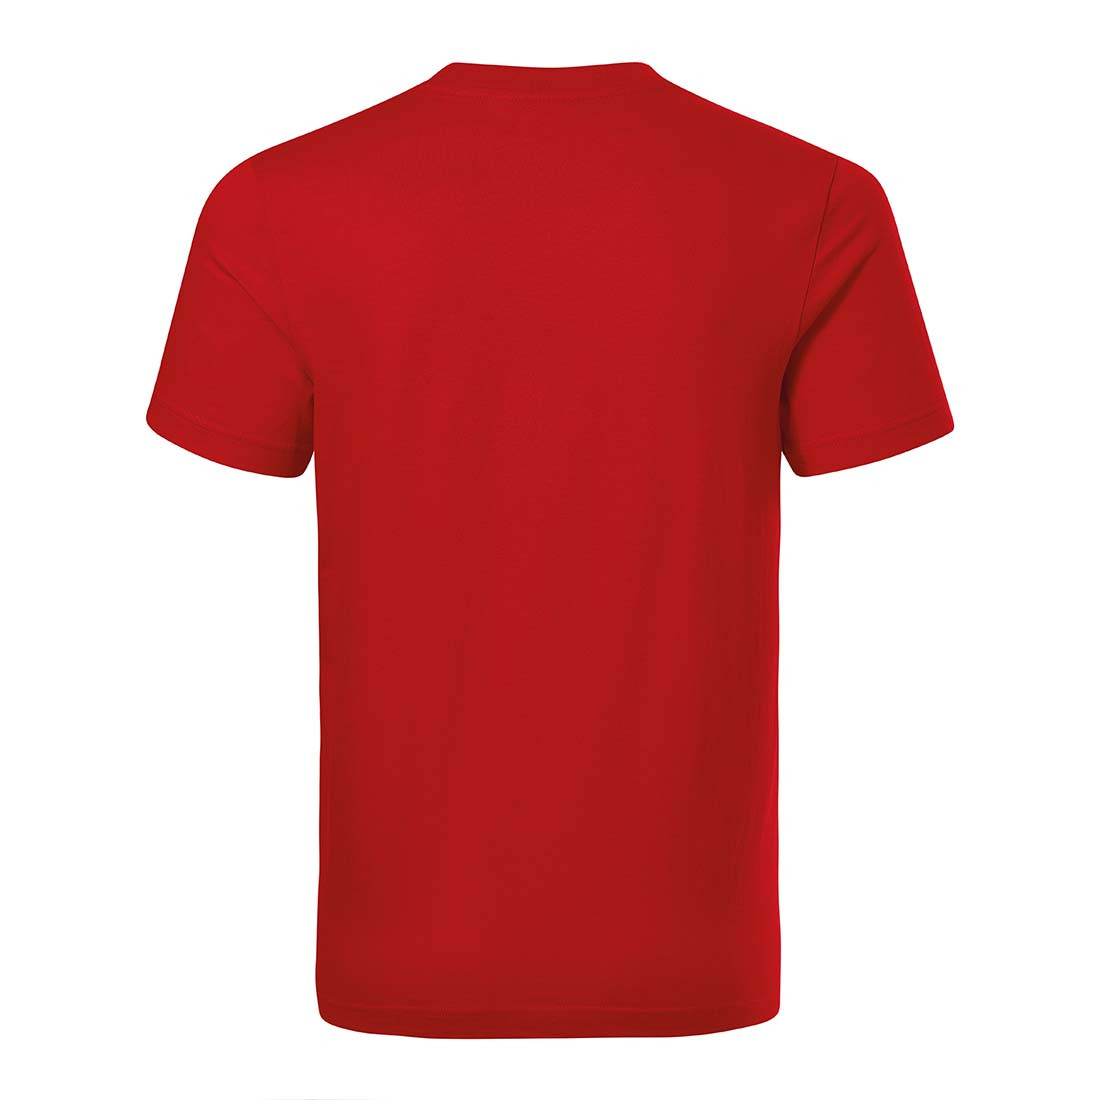 Camiseta unisex BASE - Ropa de protección